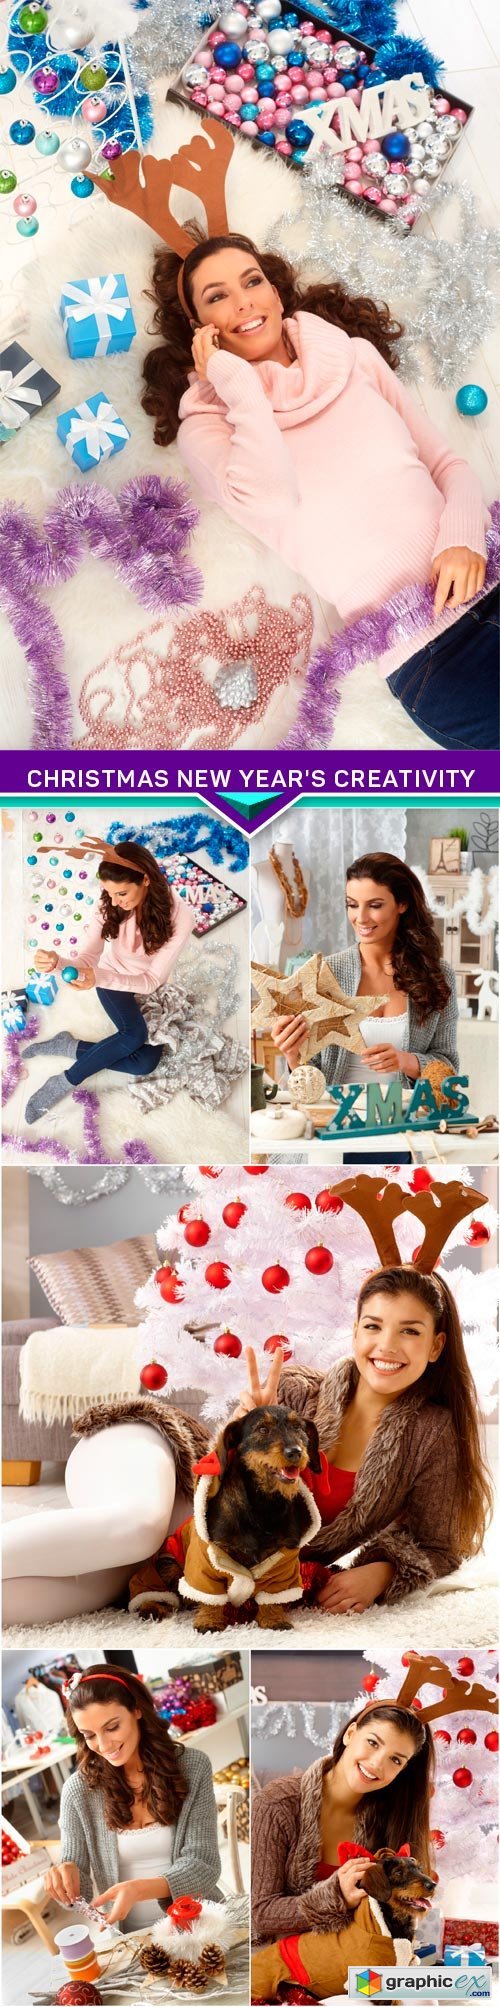 Christmas New Year's creativity 6x JPEG